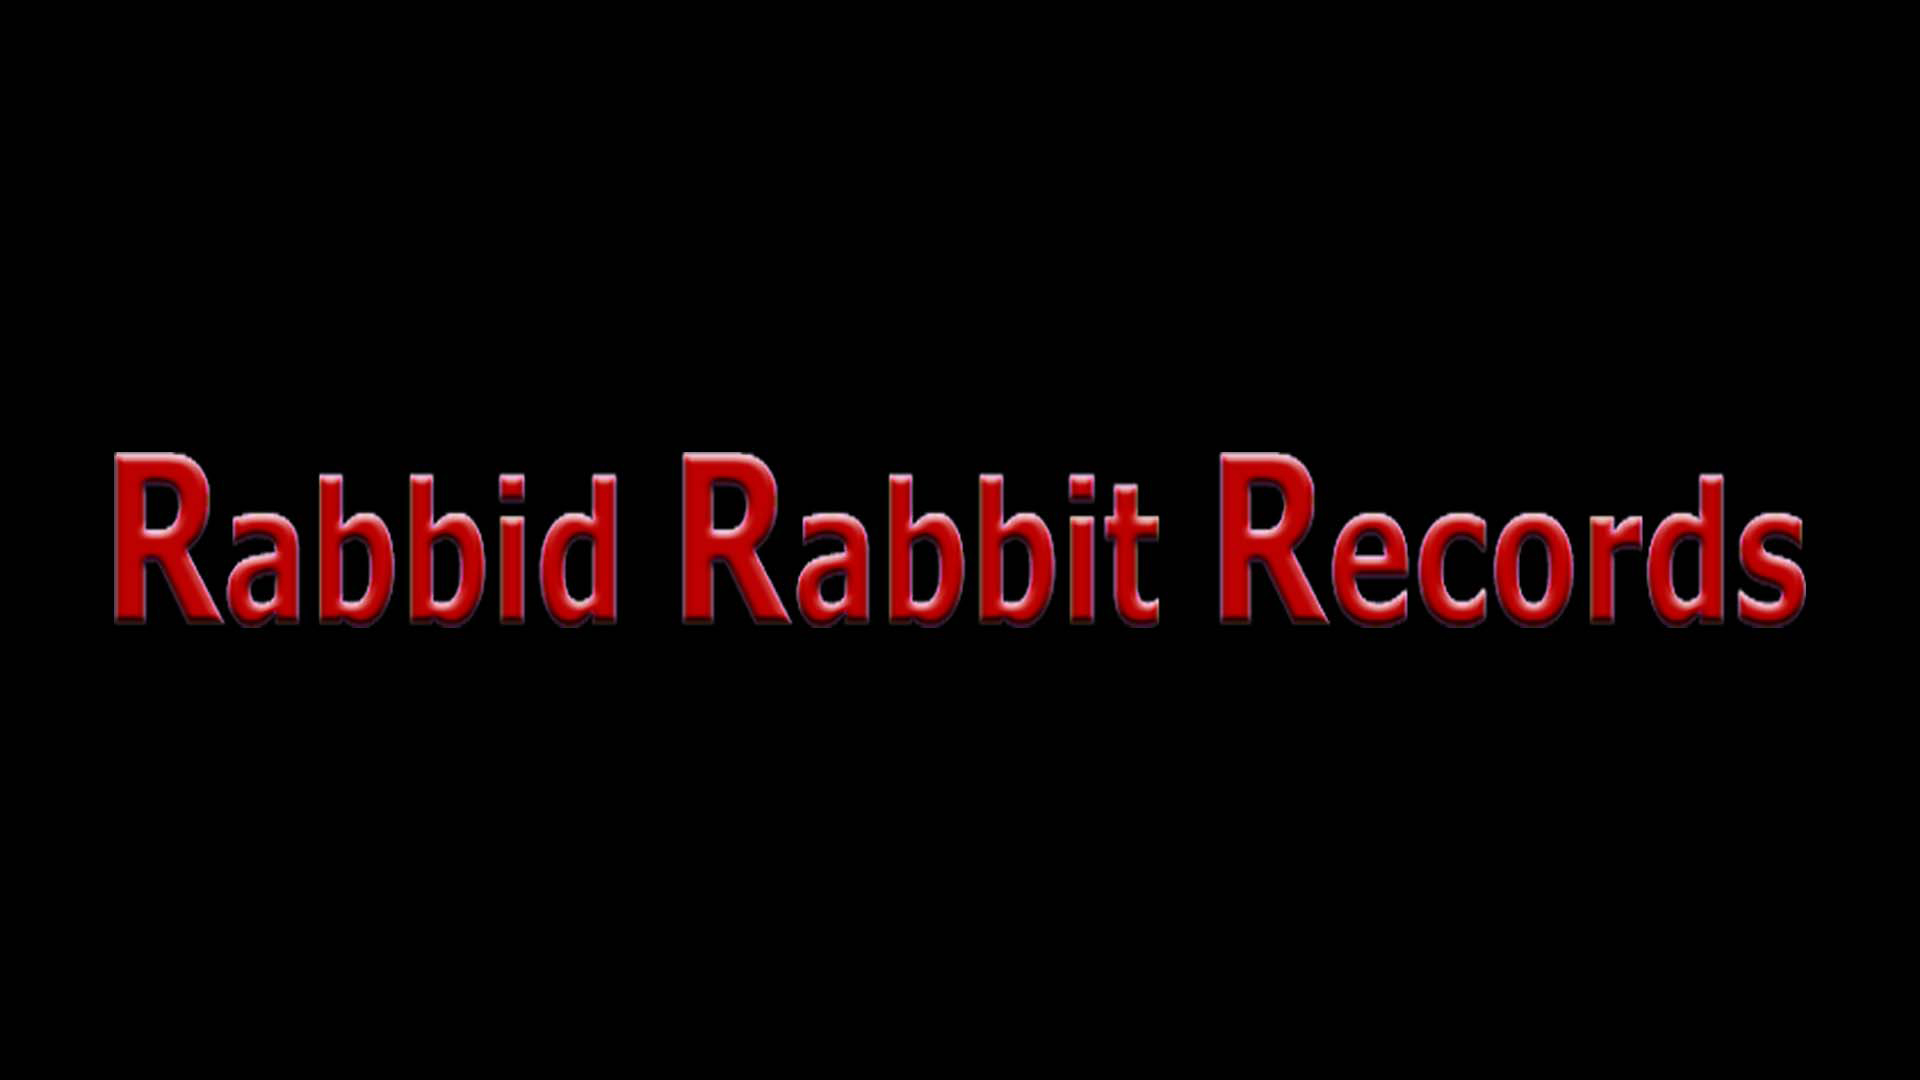 Rabbid Rabbit Records' Interactive Web Site